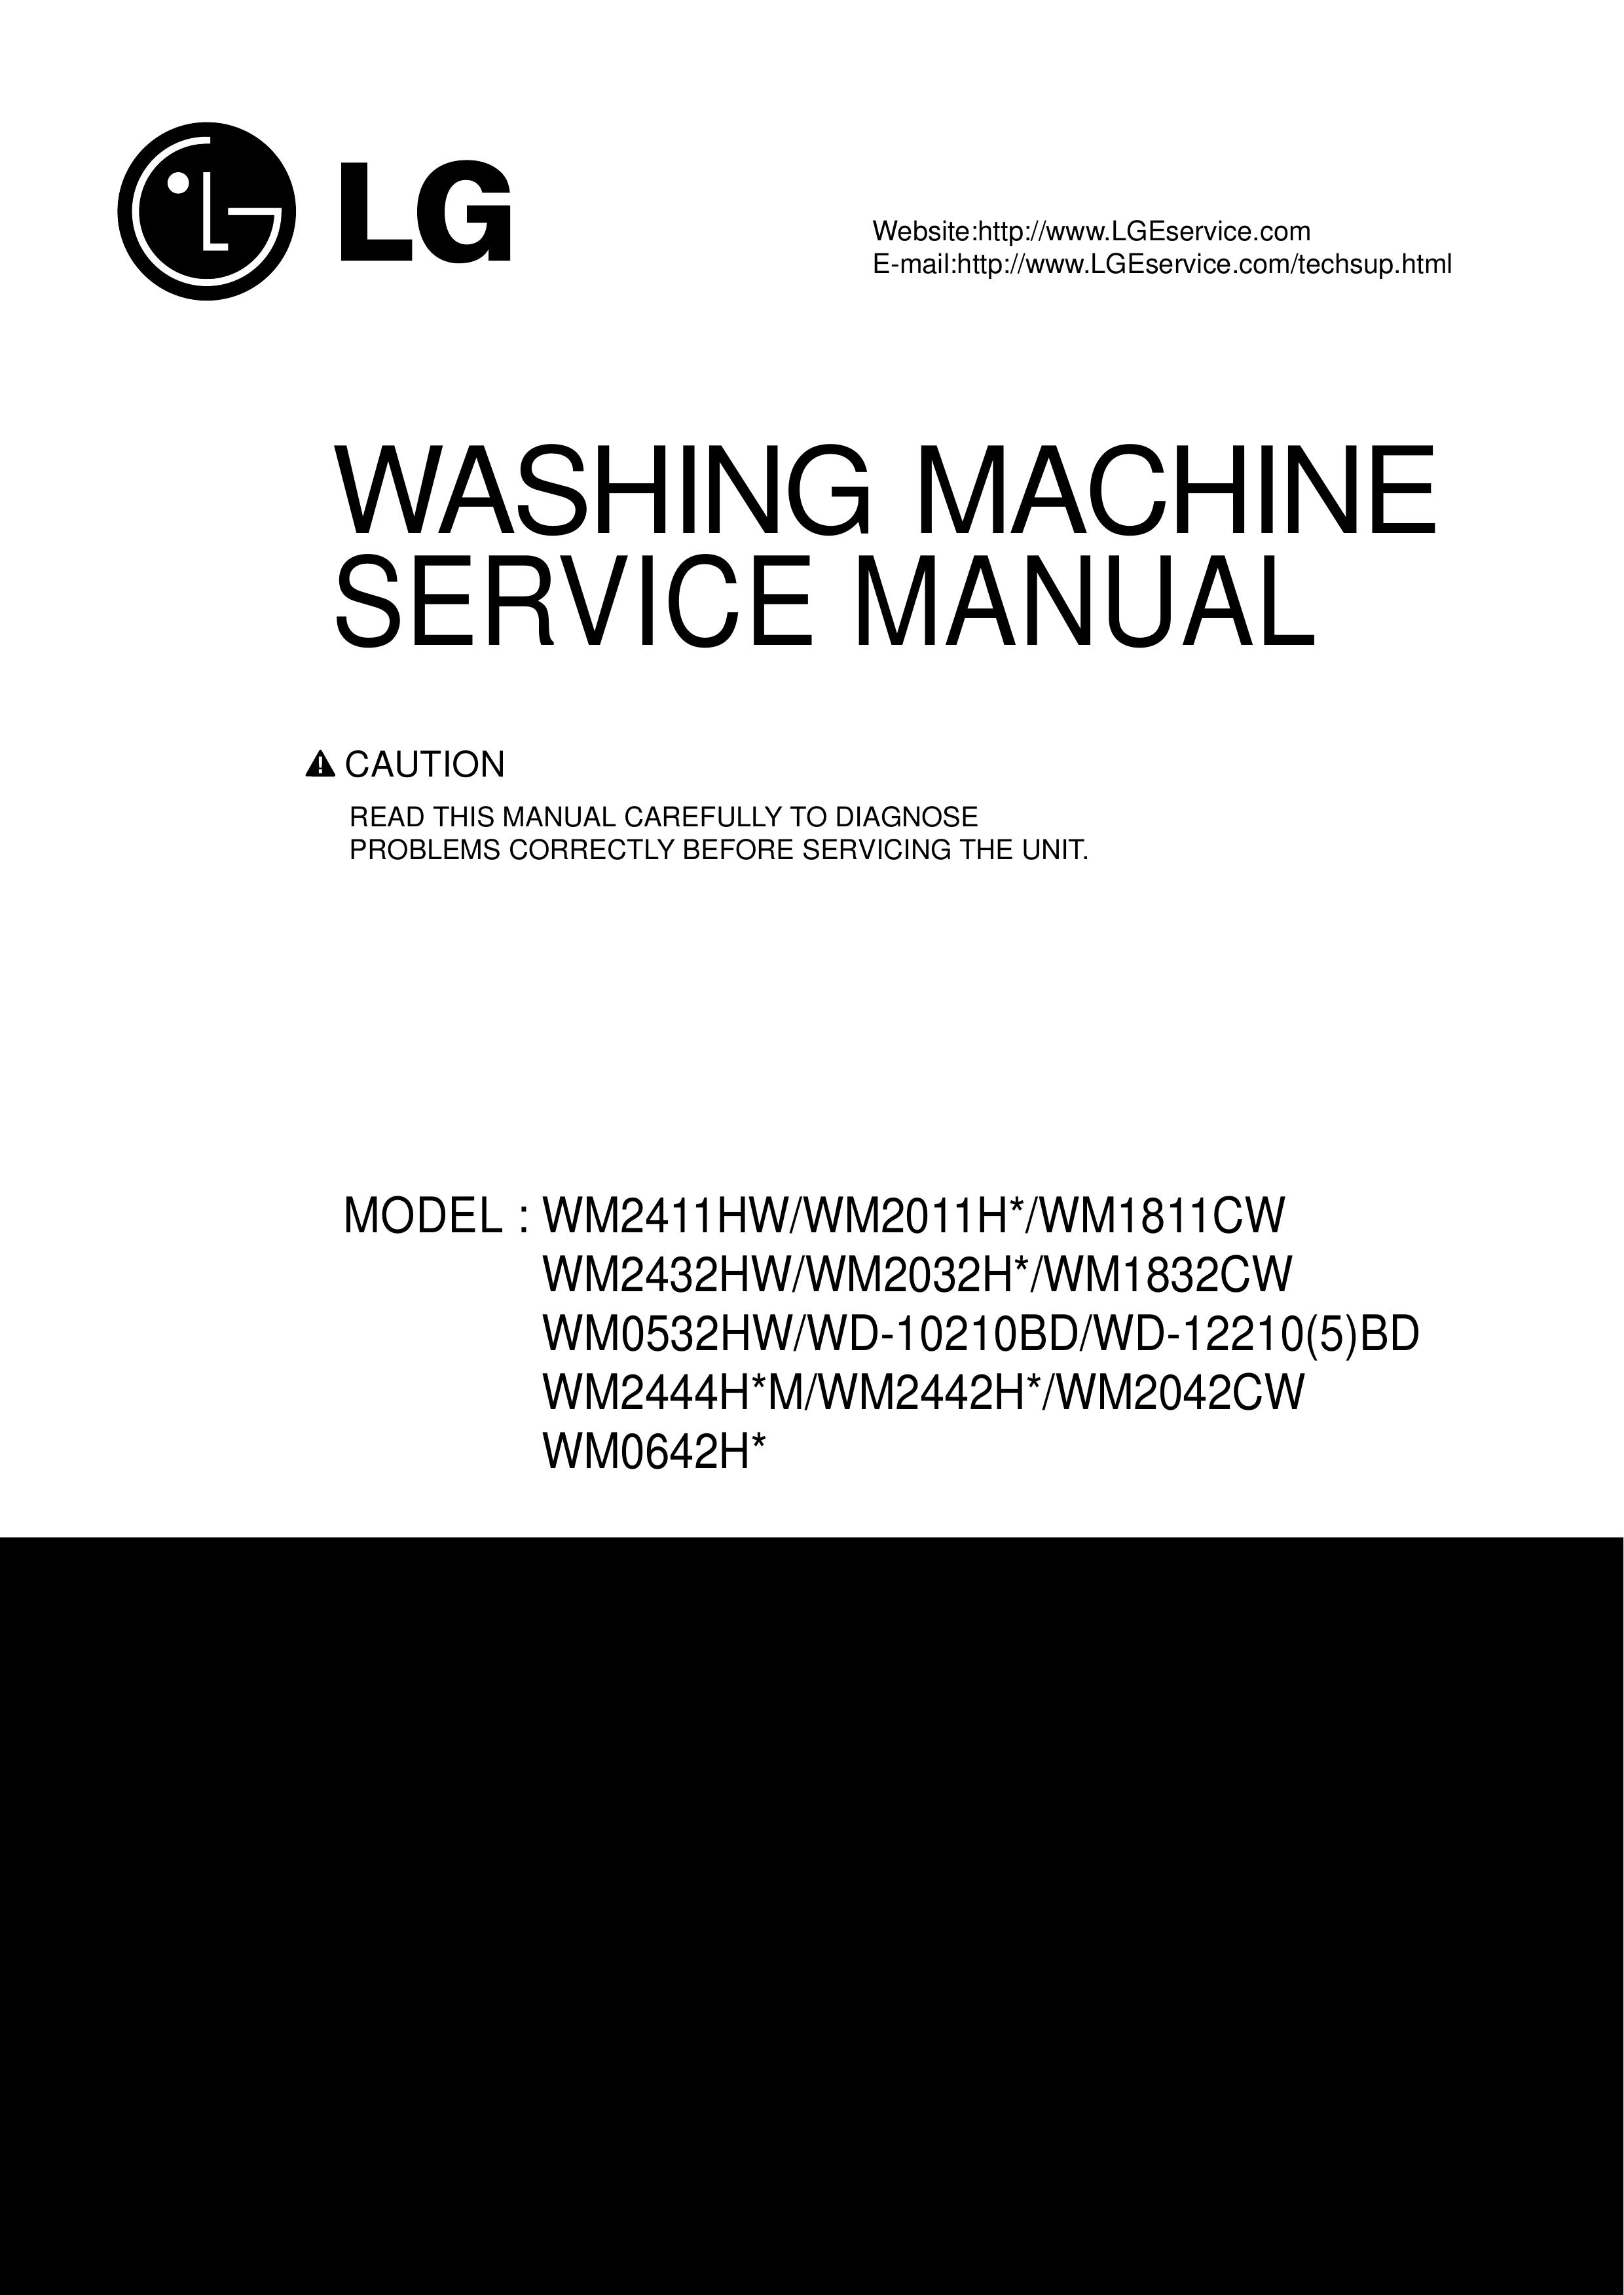 LG Electronics WM1832CW Washer/Dryer User Manual